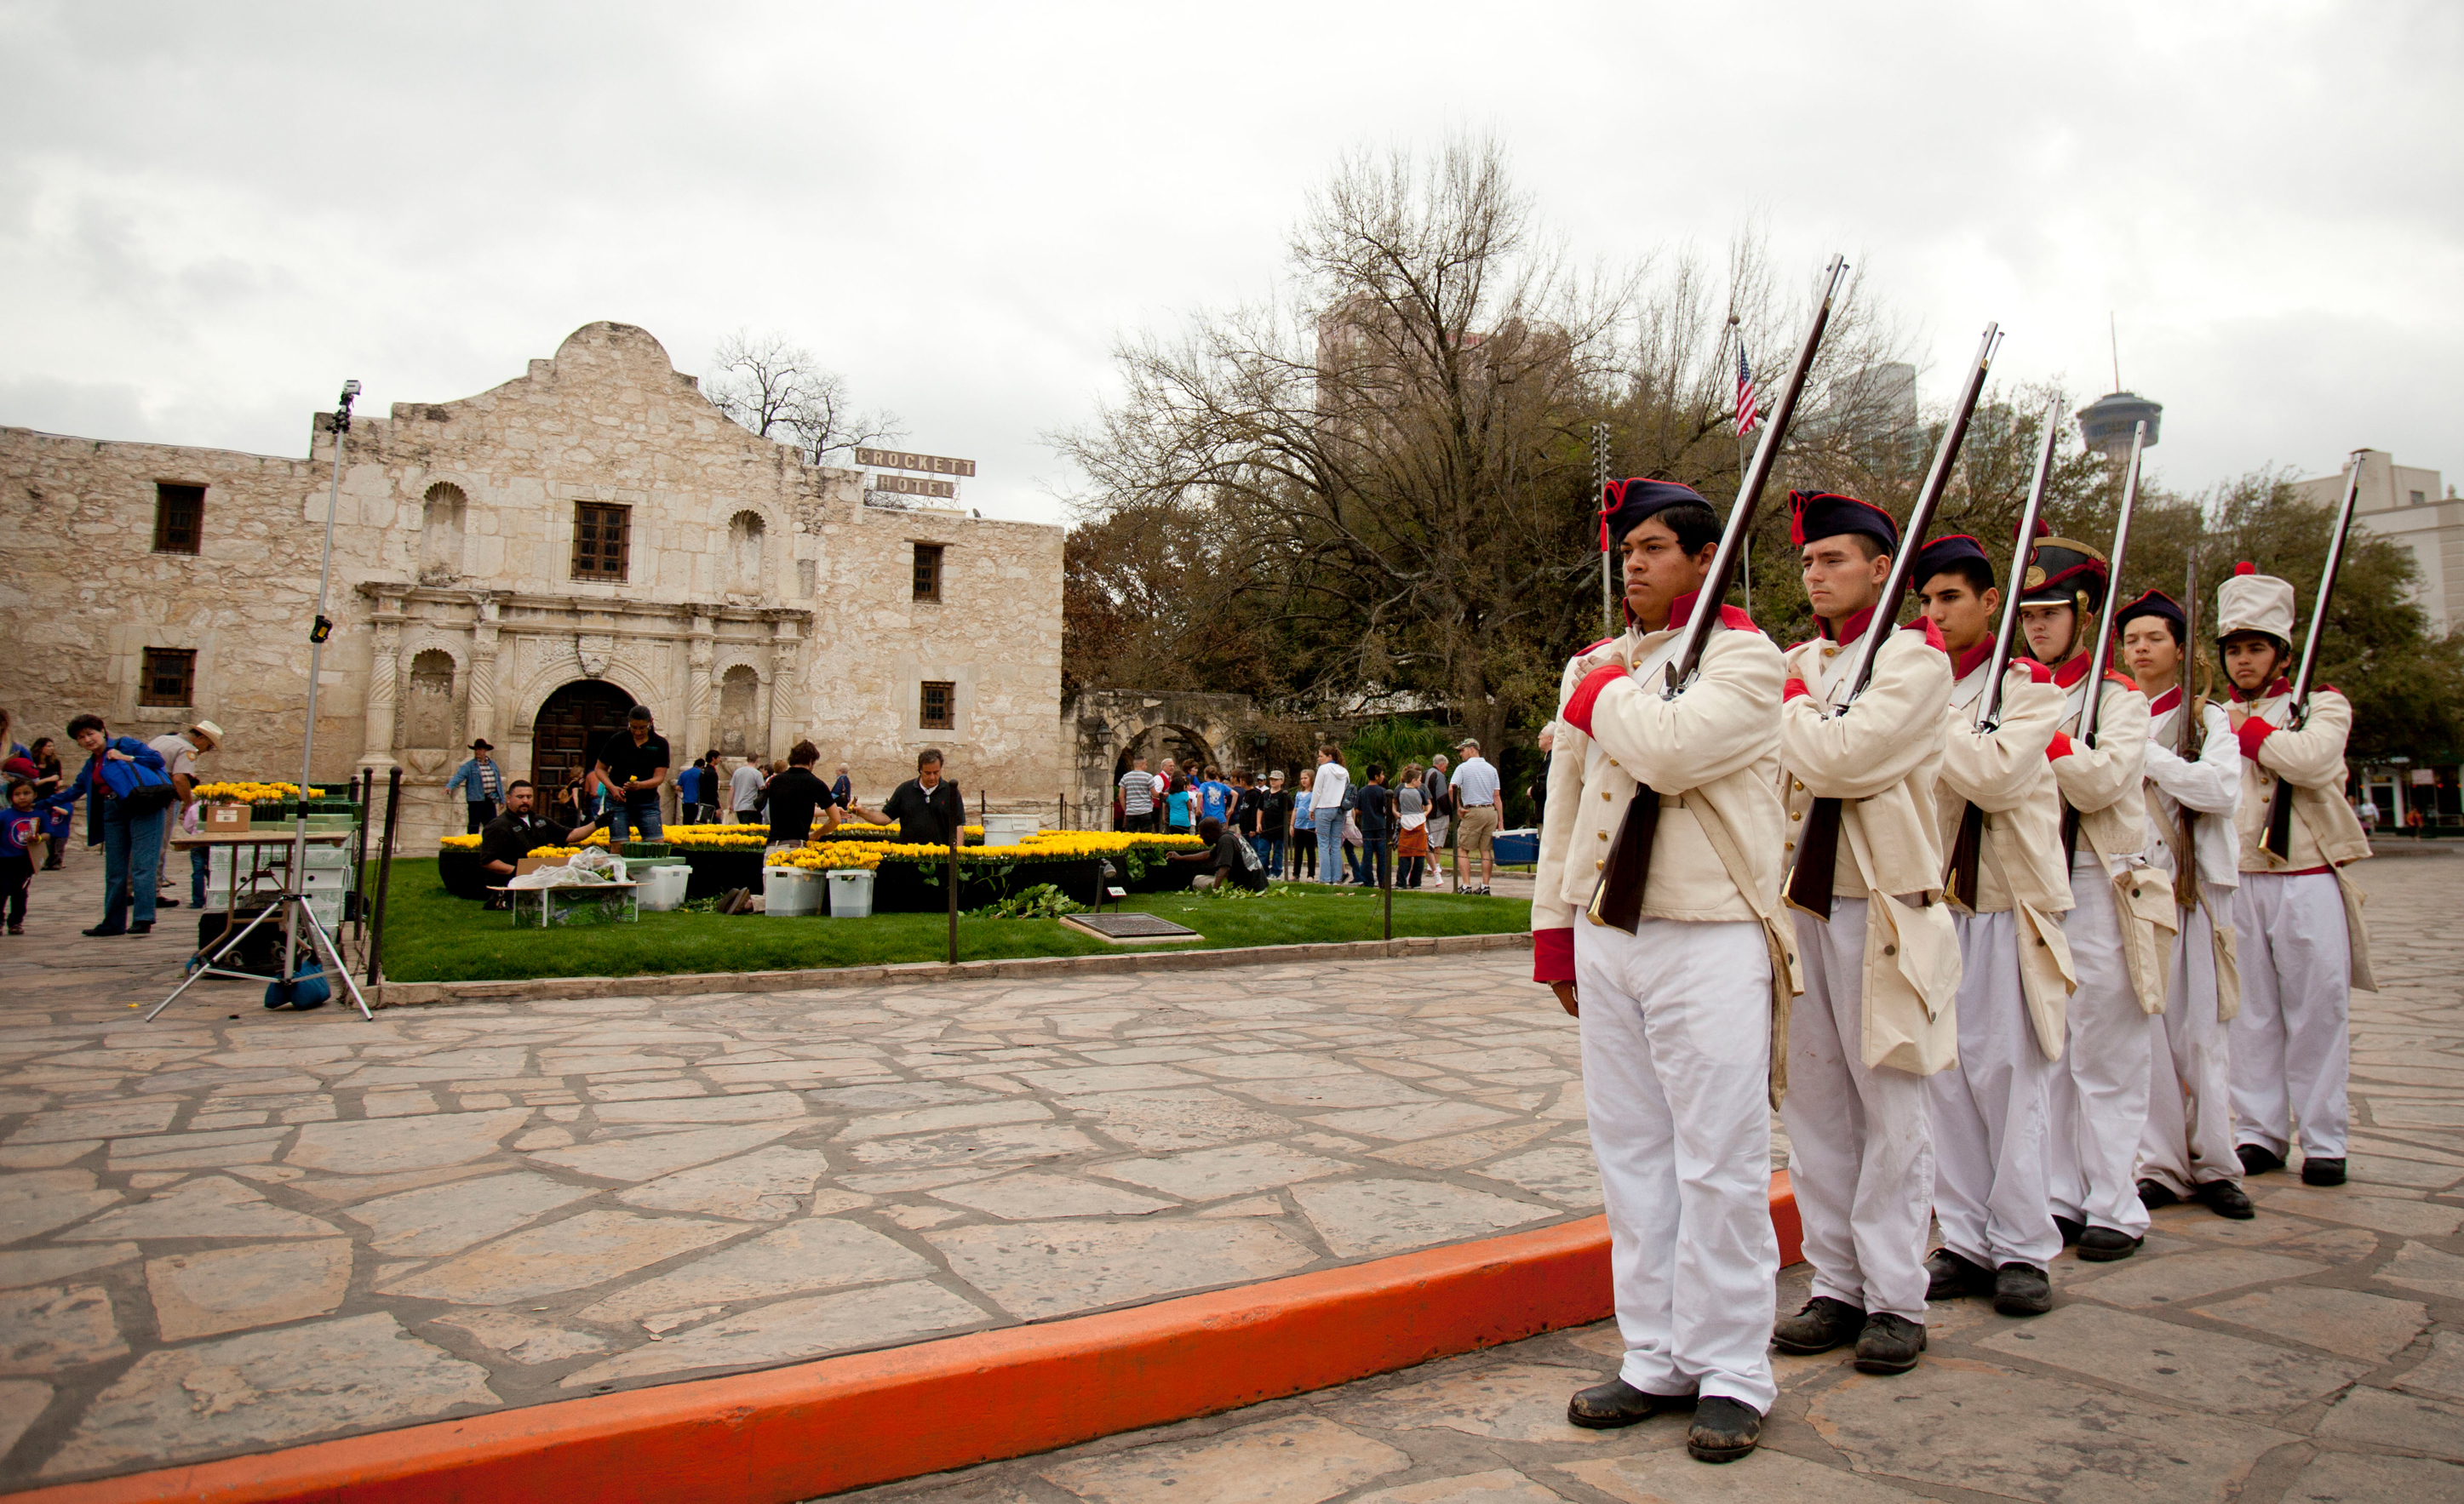 Alamo是得克萨斯州唯一经联合国教科文组织认定的世界文化遗产